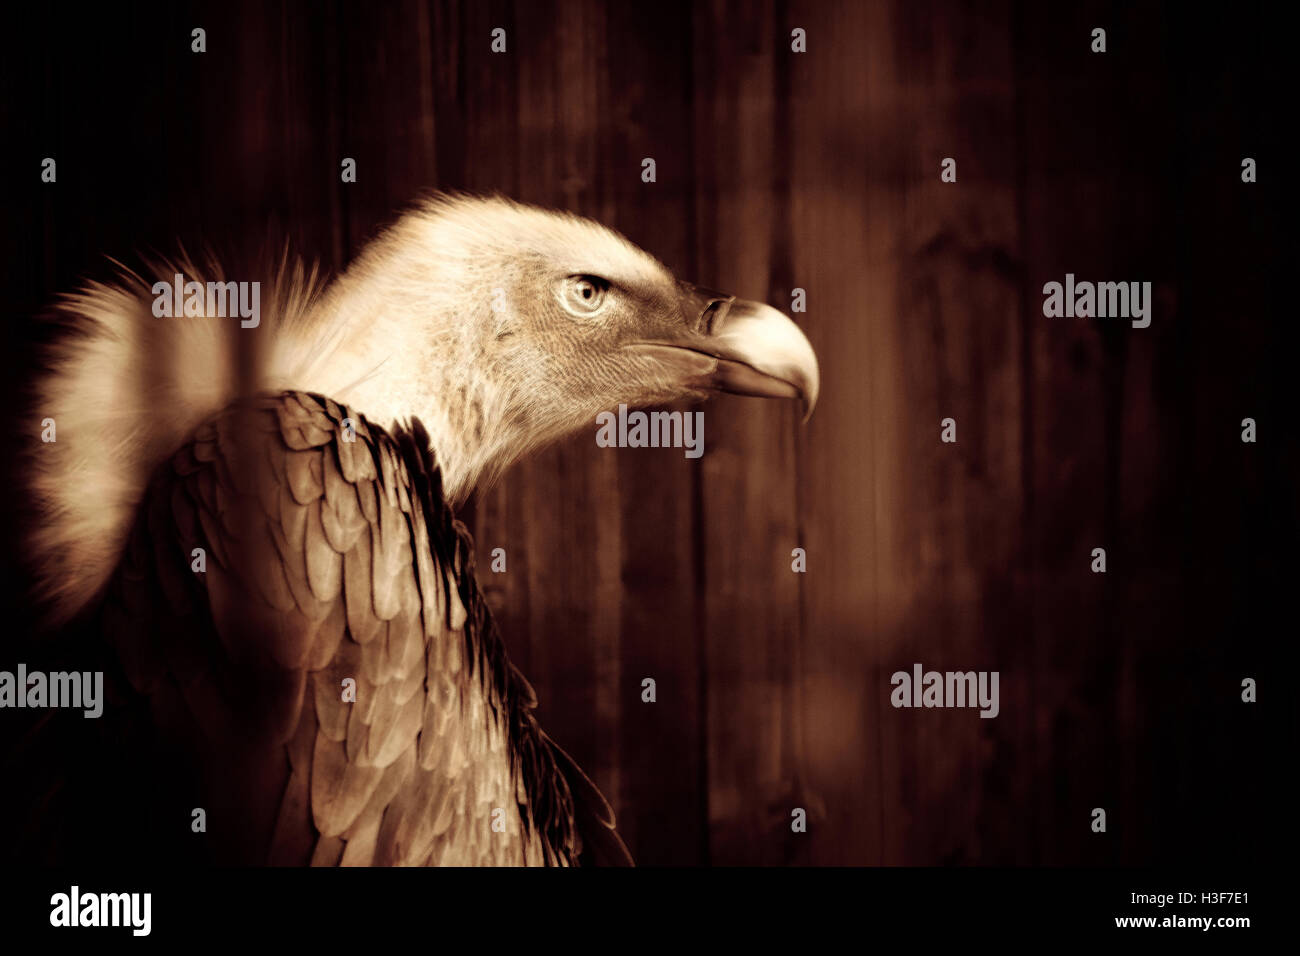 Convicted vulture artwork Stock Photo